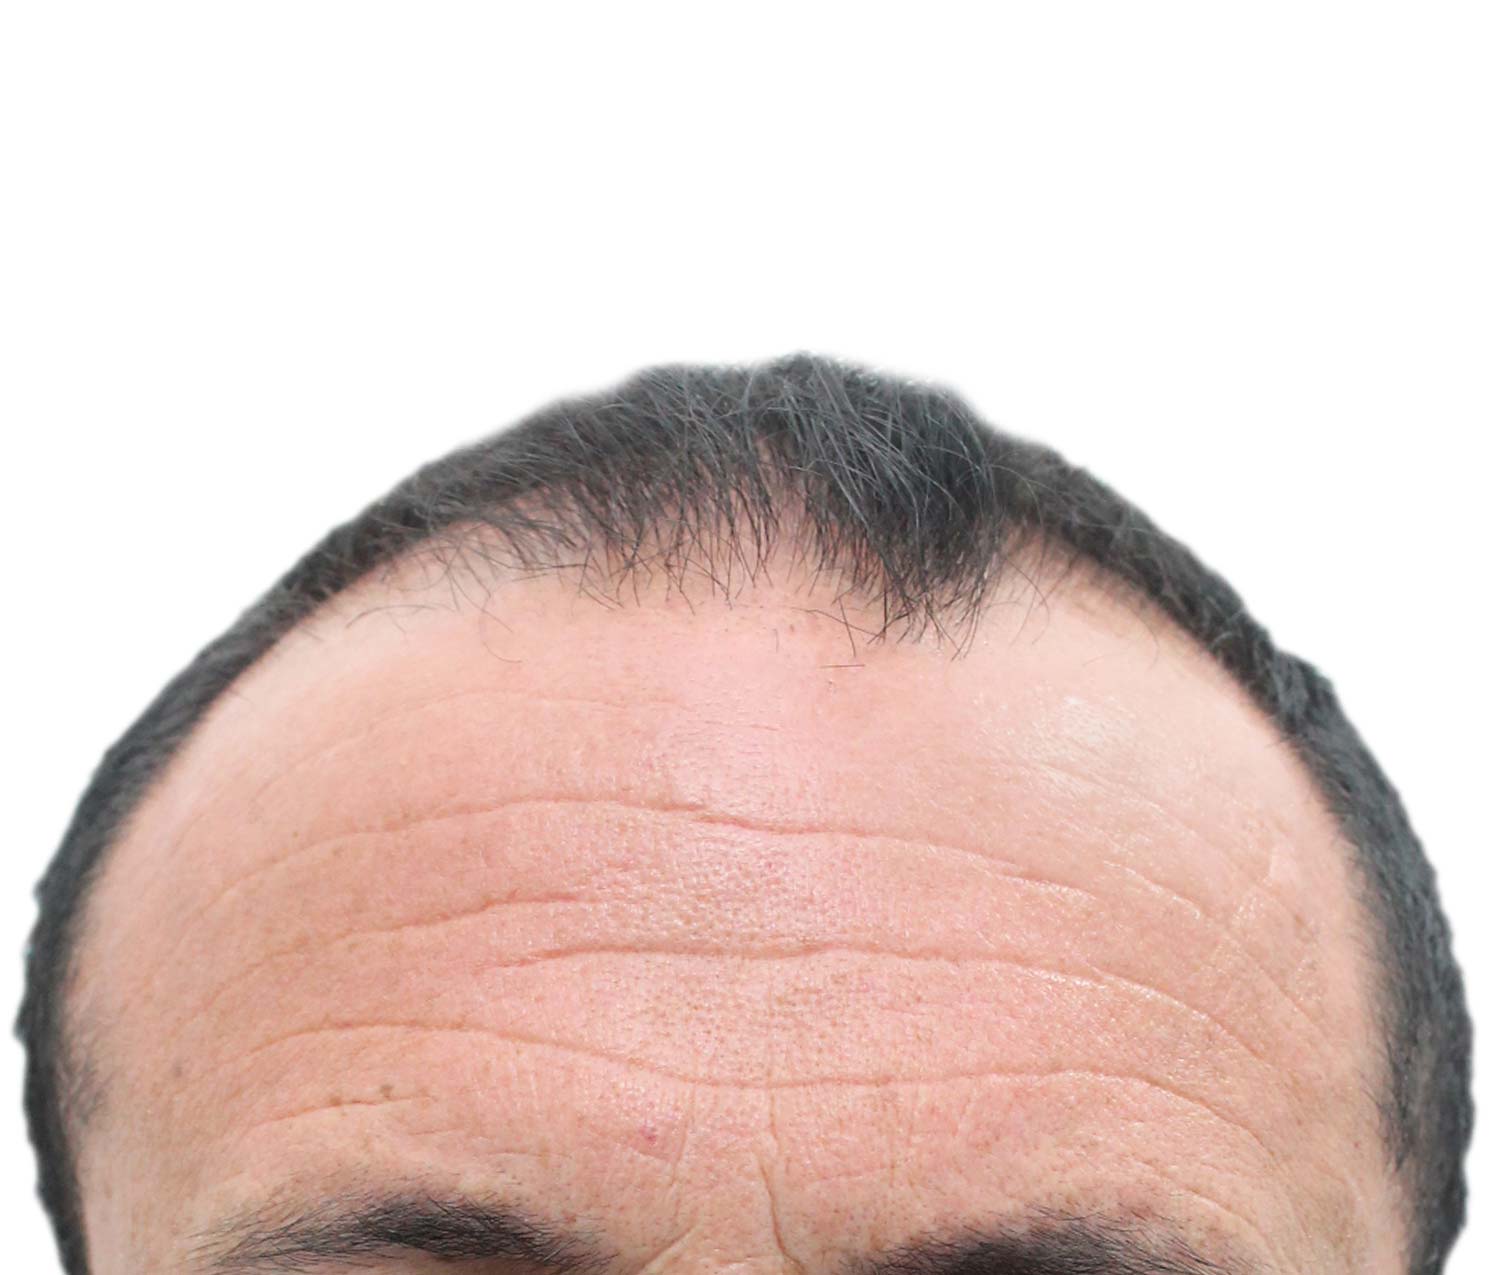 Before hair restoration | Real patient, results may vary per individual